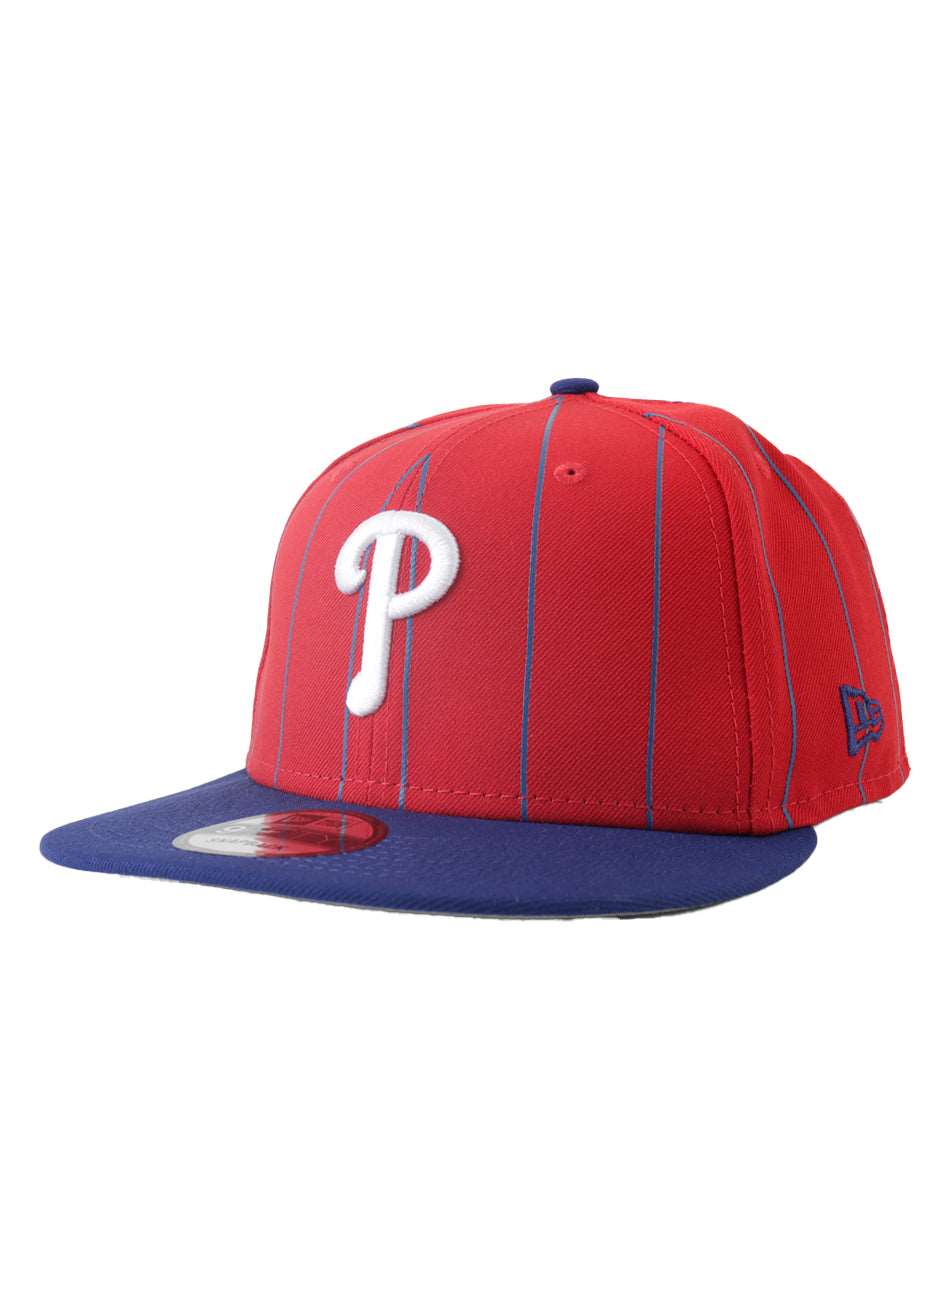 Philadelphia Phillies Vintage Pinstripe OTC 950 Snap-Back Hat